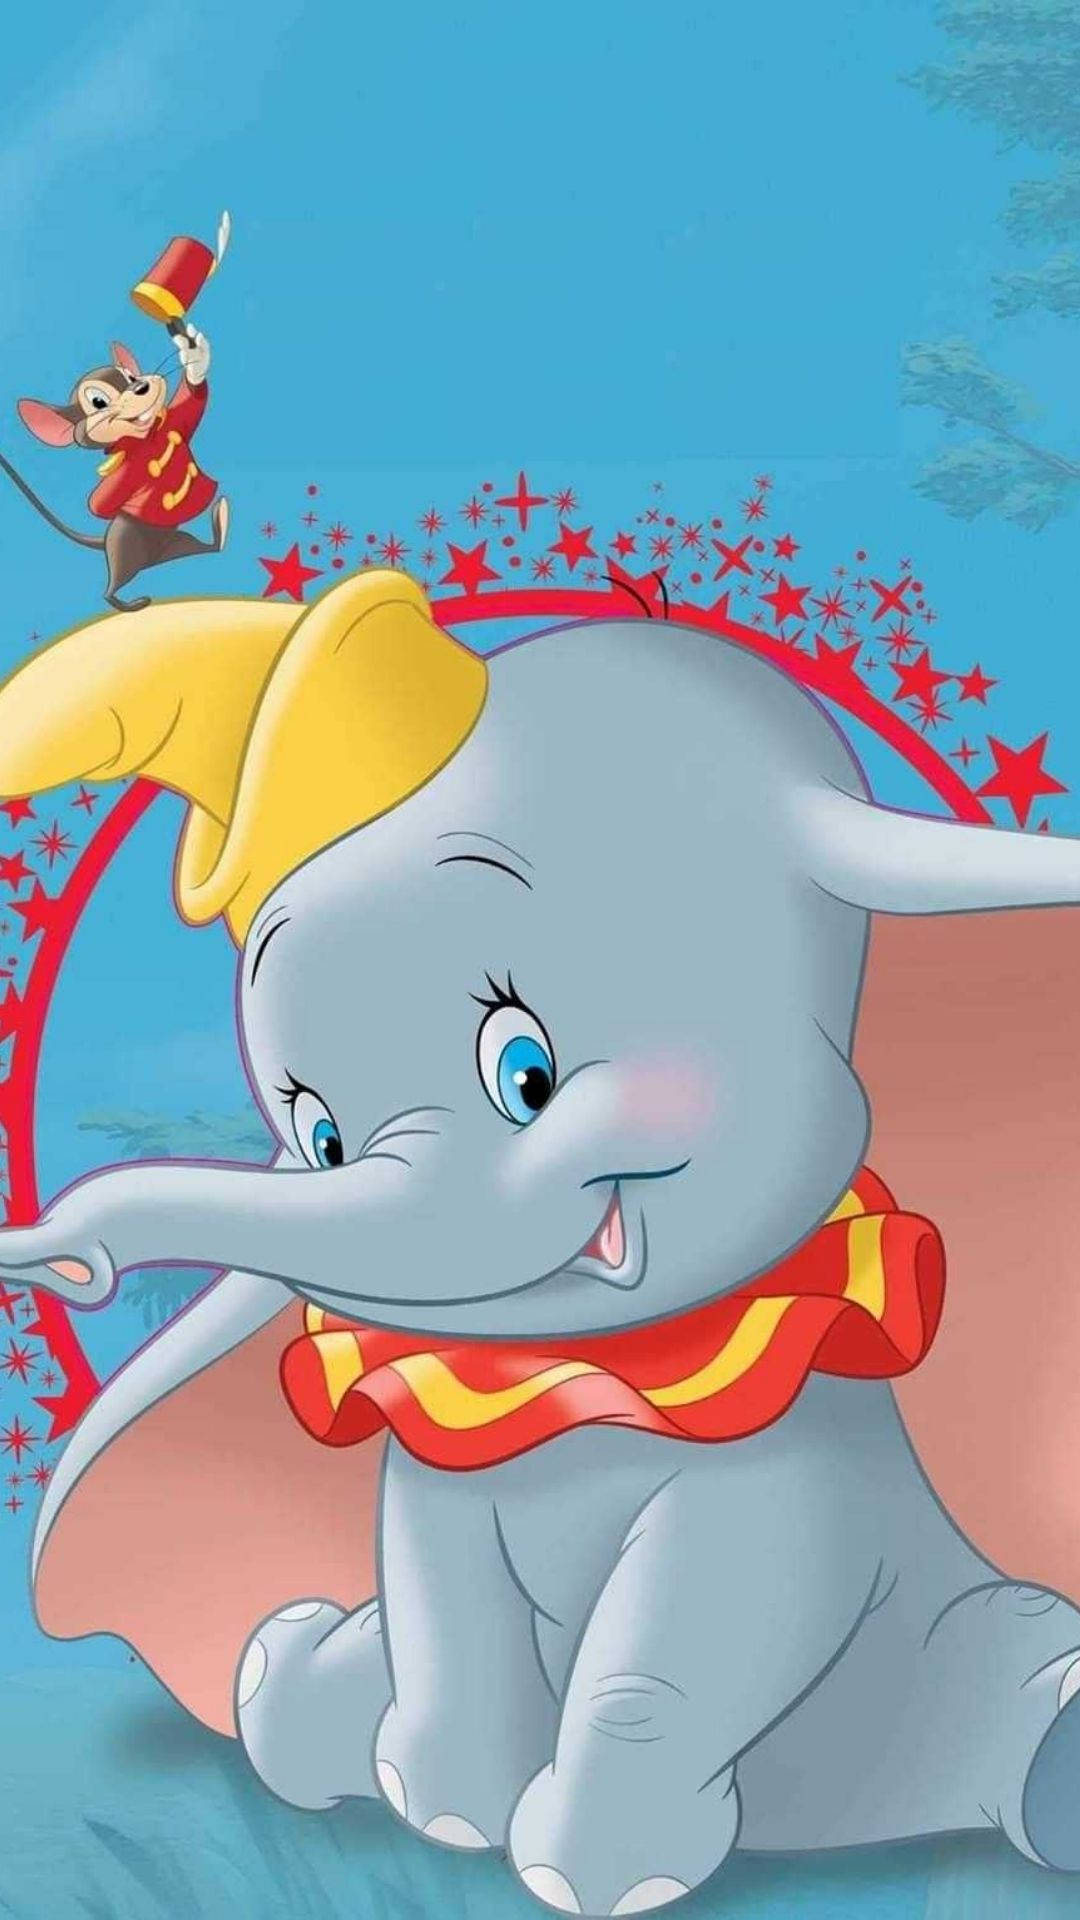 Free Dumbo Wallpaper Downloads, [100+] Dumbo Wallpapers for FREE |  